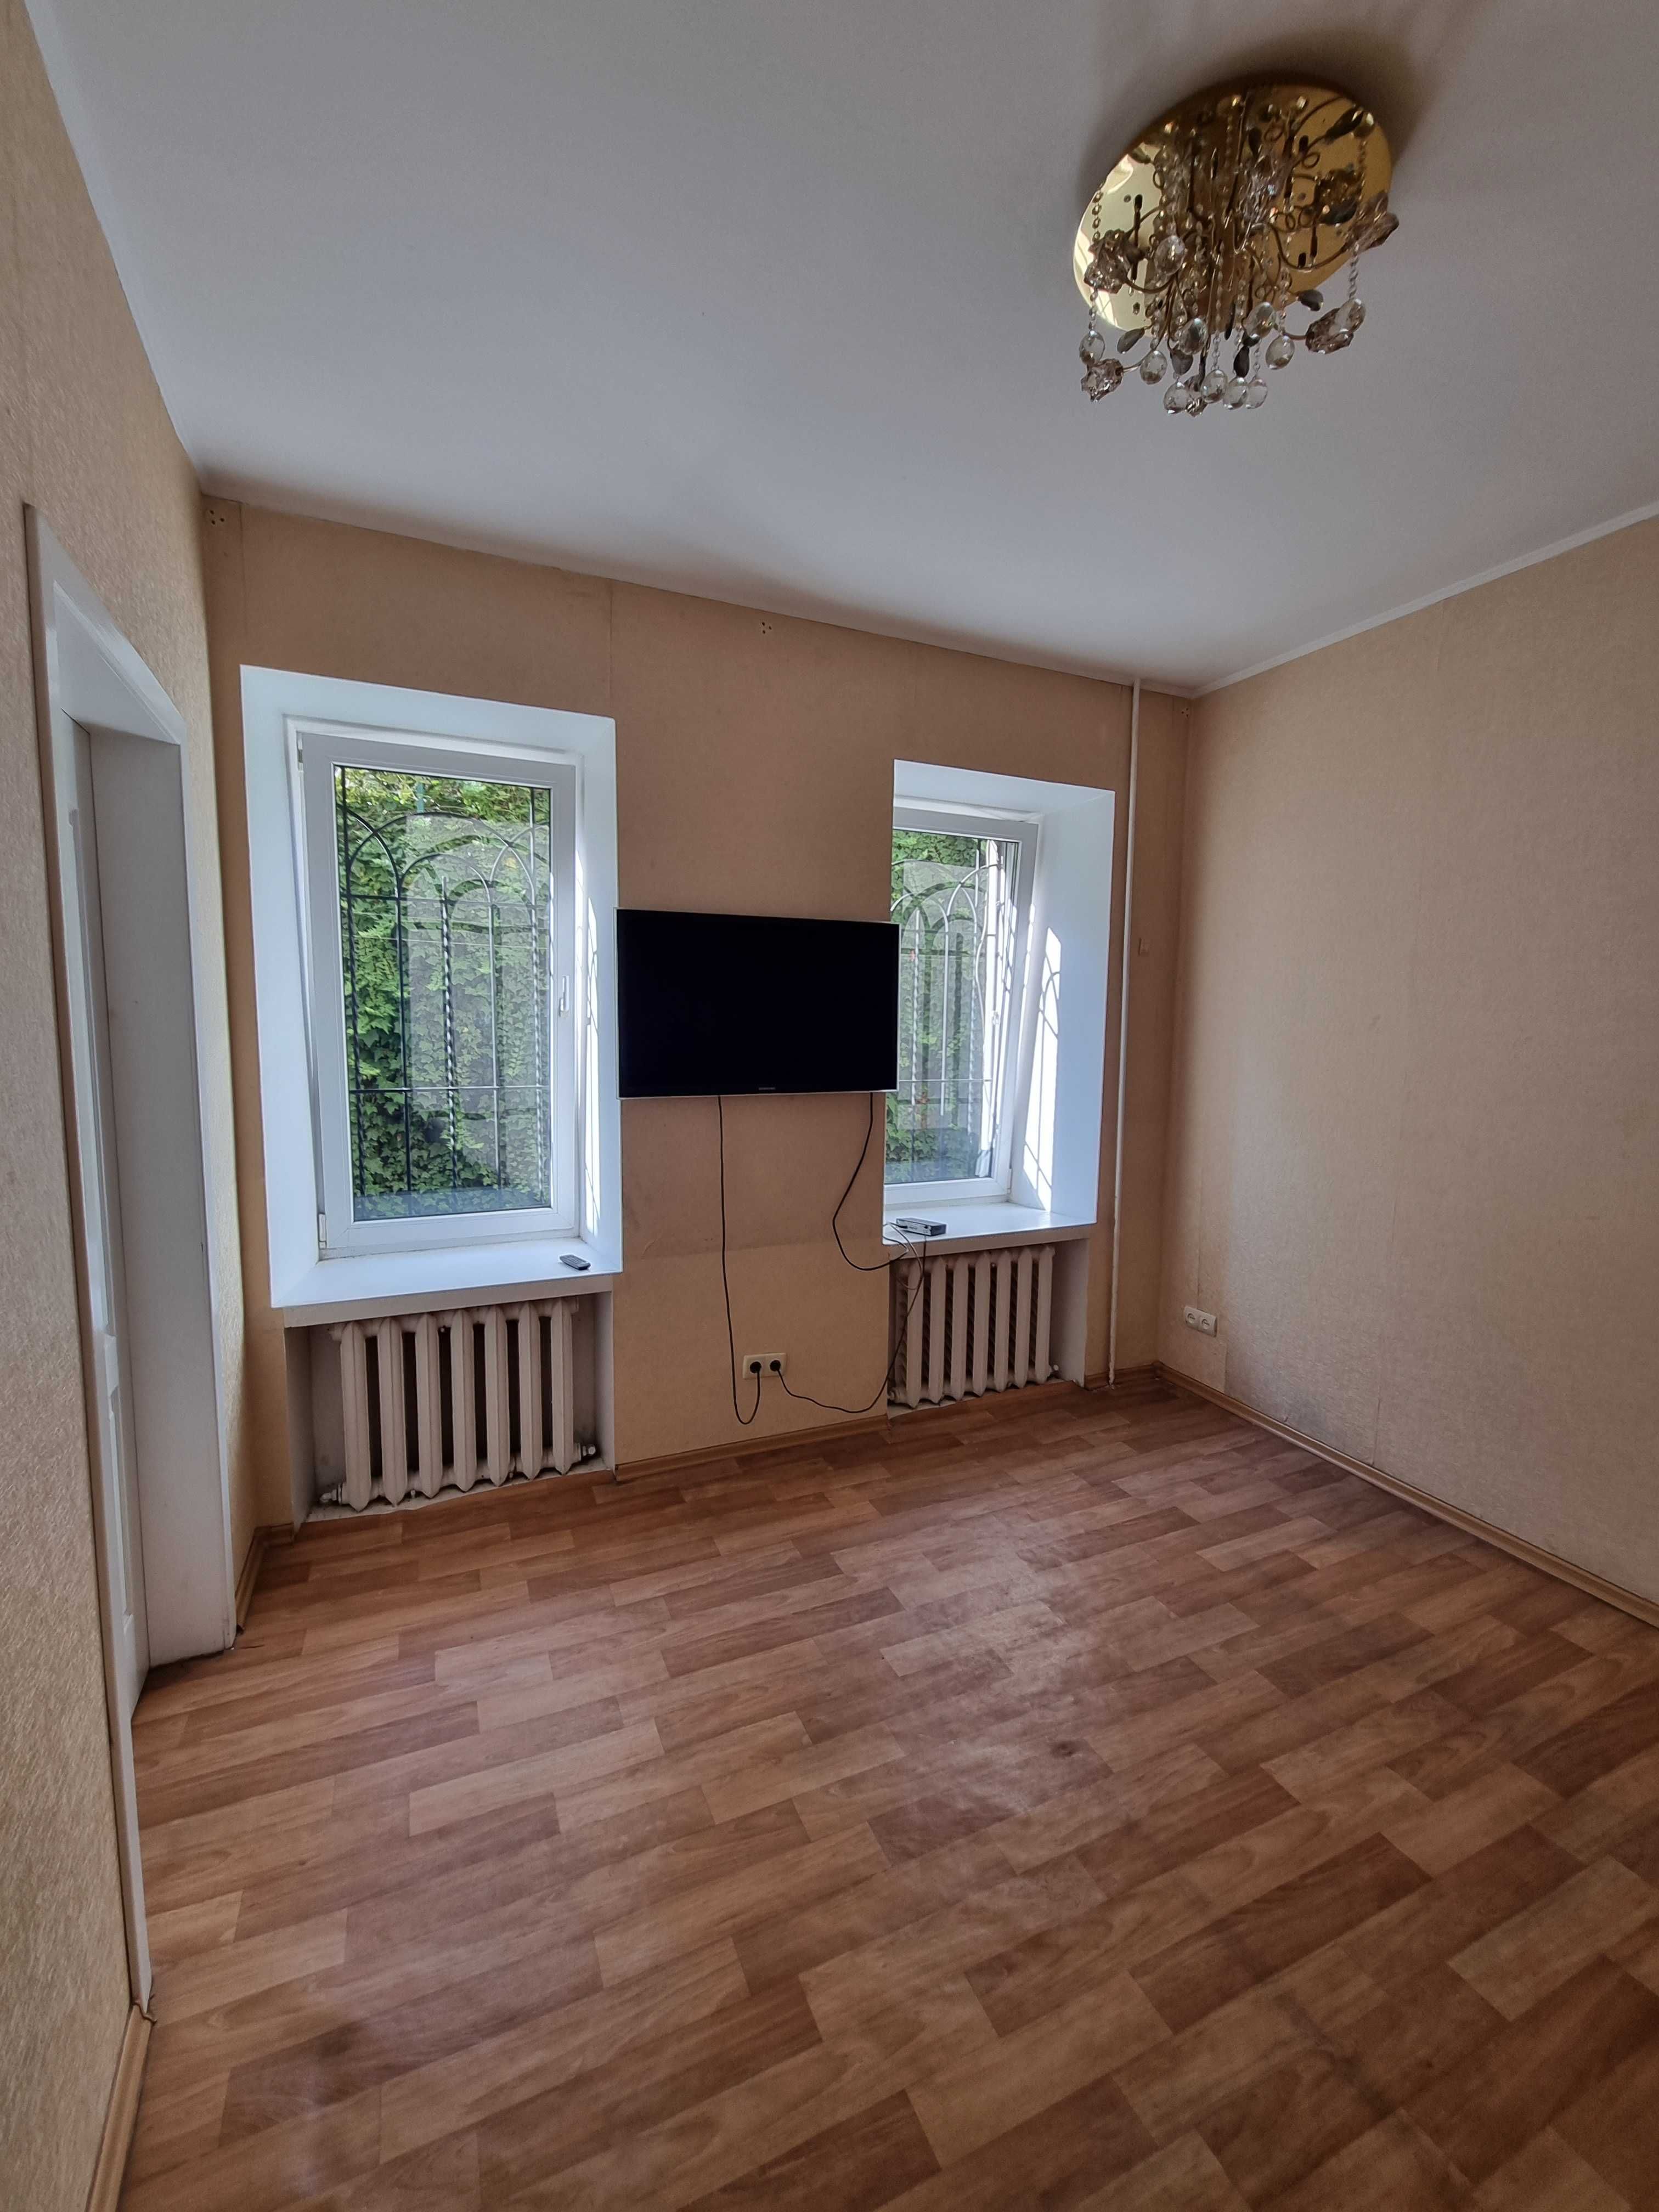 2 комнатная квартира на Богдана Хмельницкого